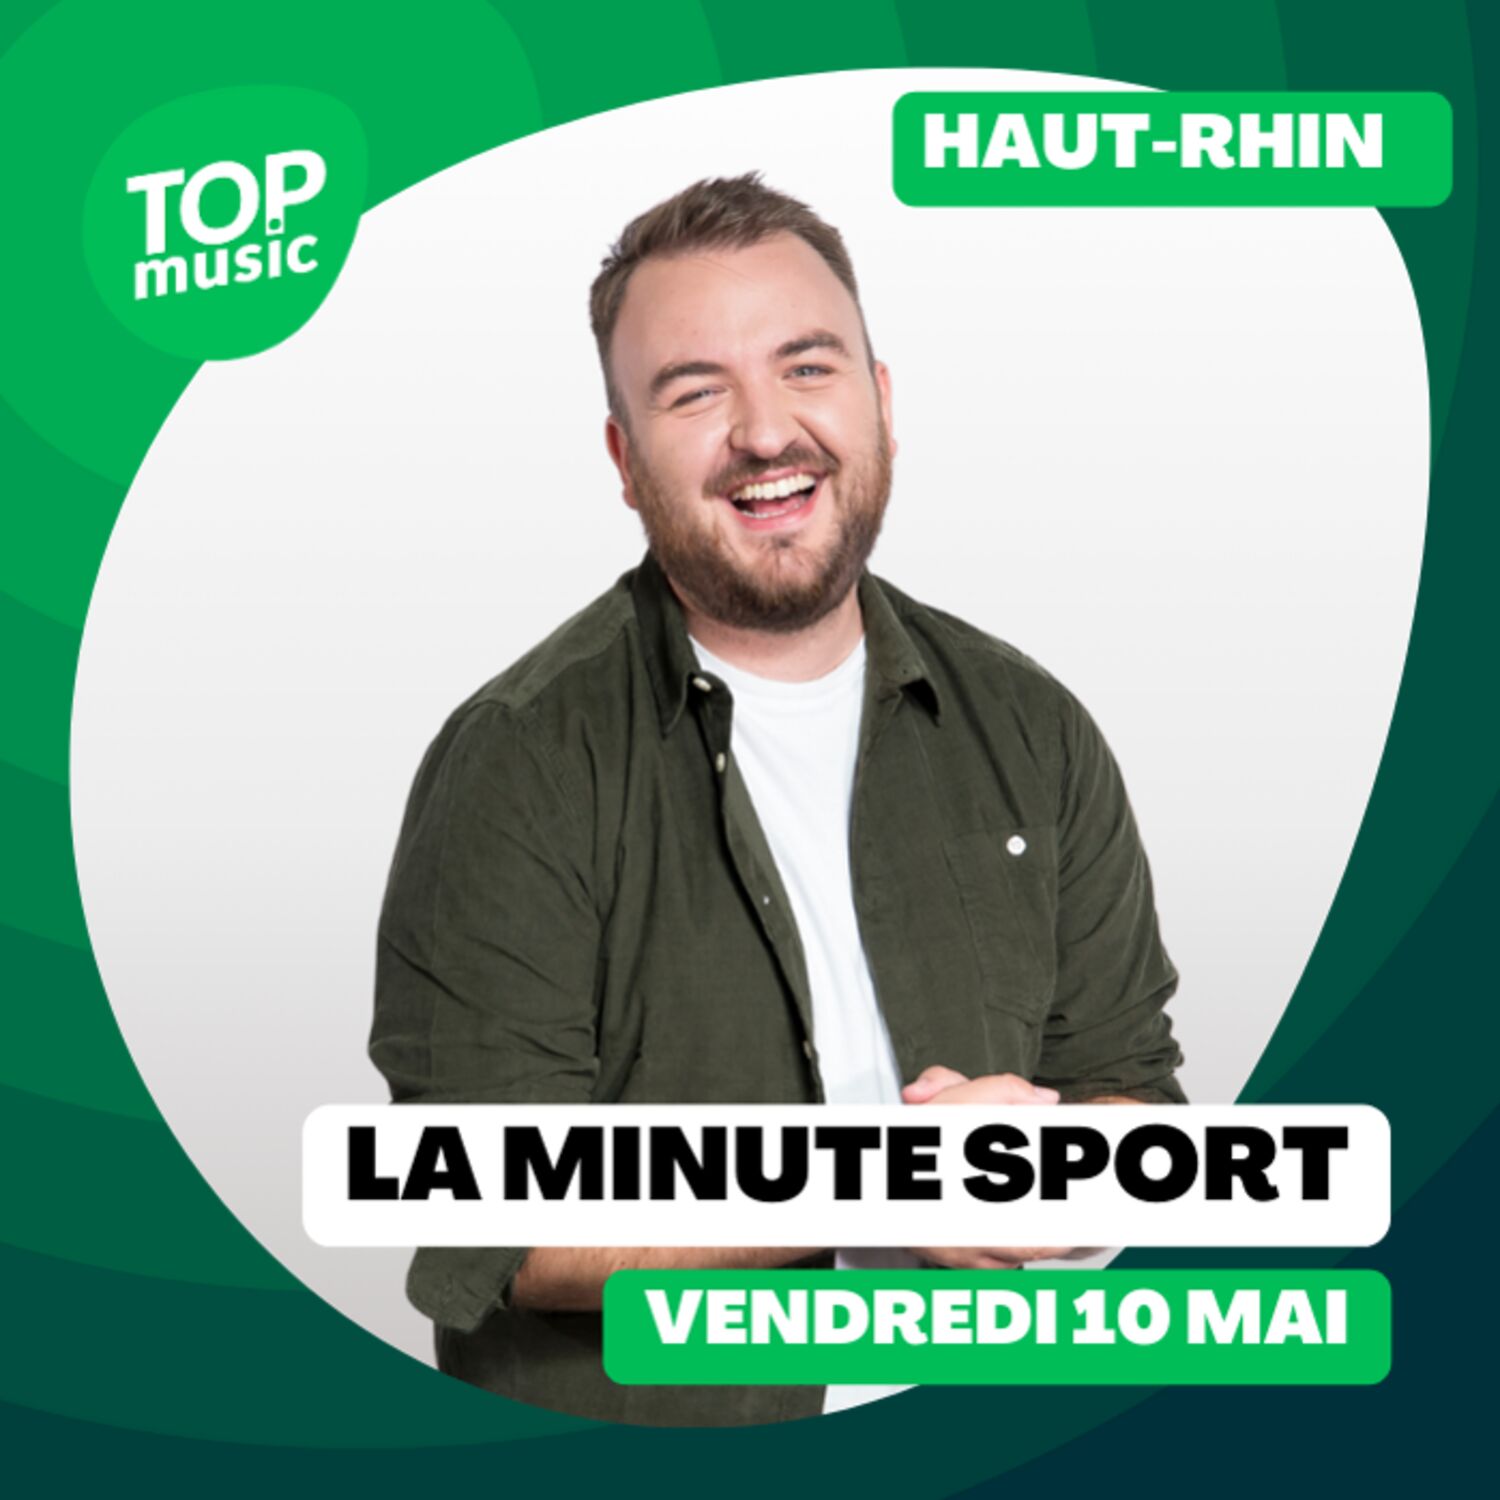 La Minute sport du Haut-Rhin - vendredi 10 mai